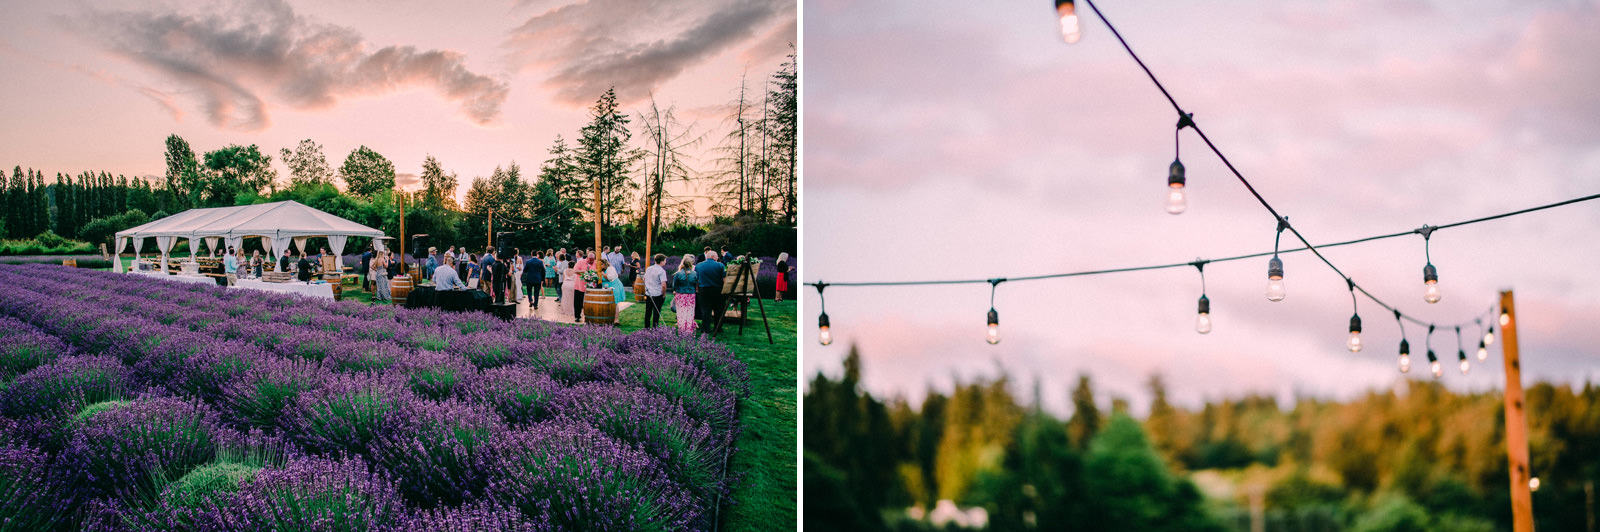 105-woodinville-lavendar-farm-wedding-with-golden-glowy-photos.jpg